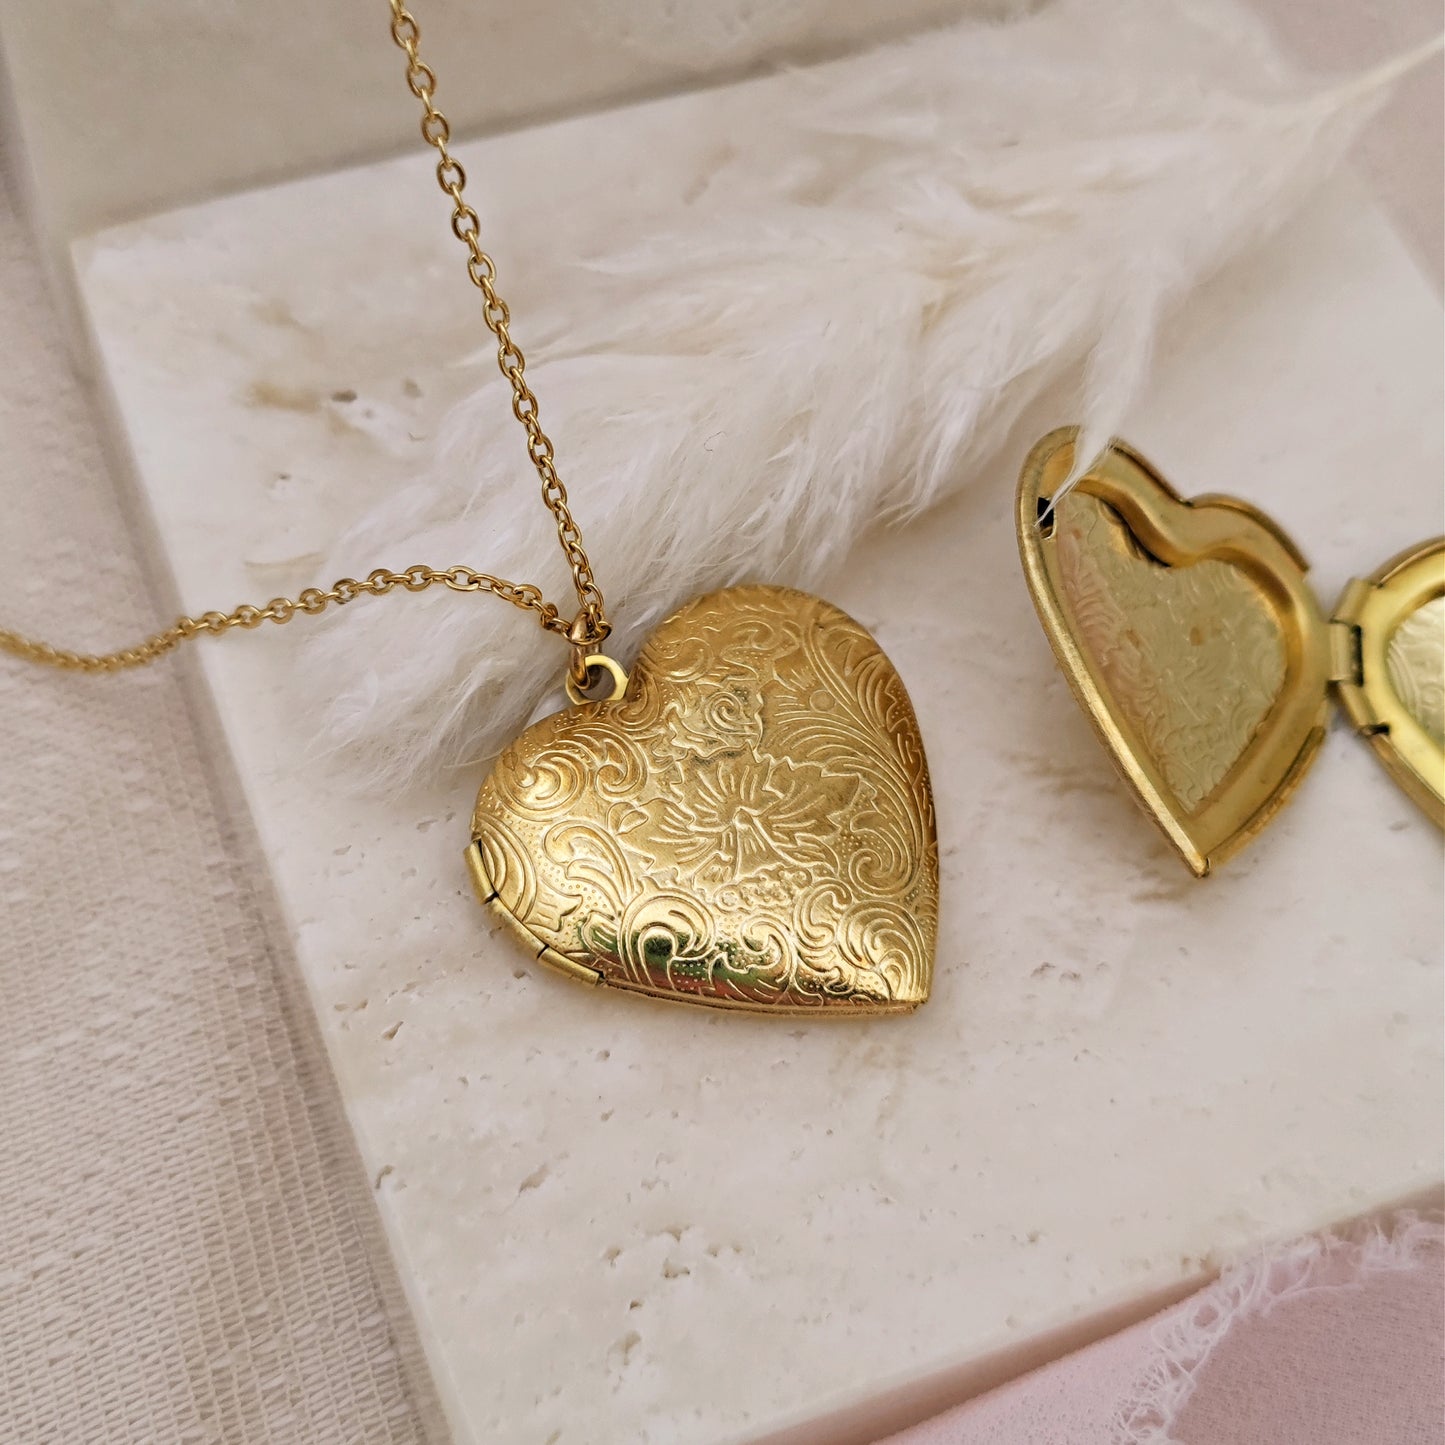 Heart Locket Necklace, Friendship Necklace, Medium size